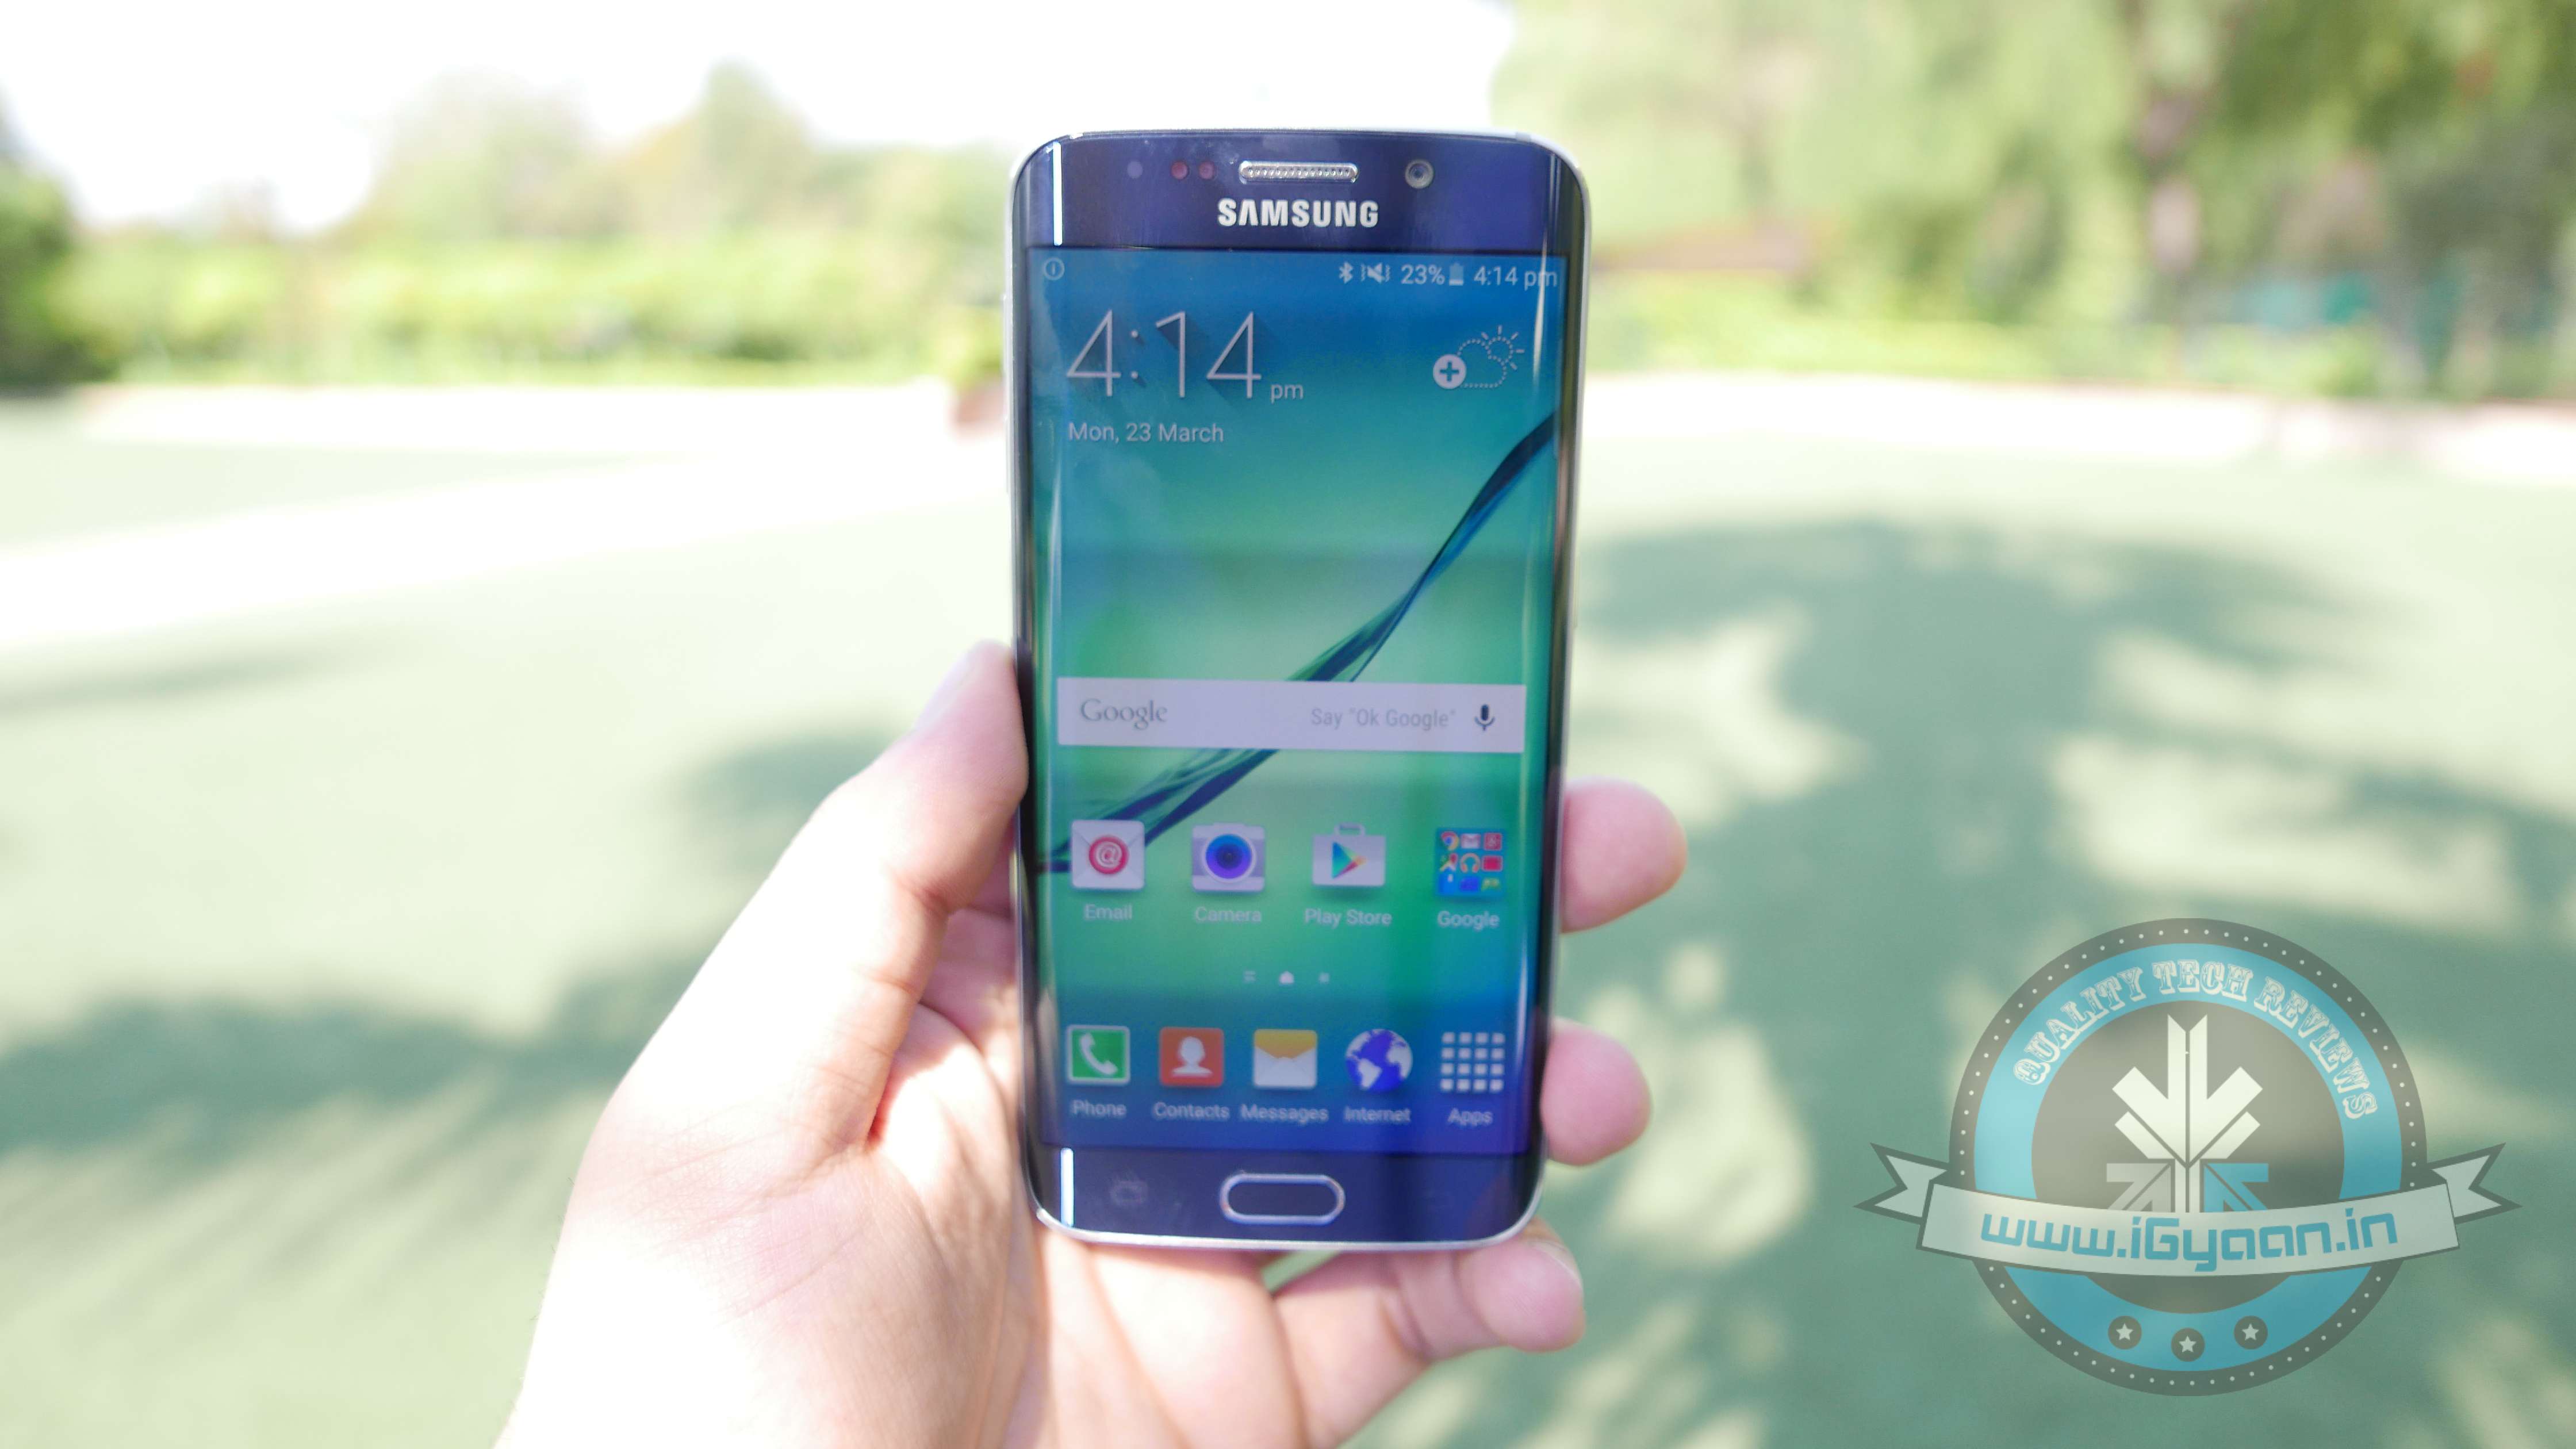 Samsung Galaxy S6 4pda